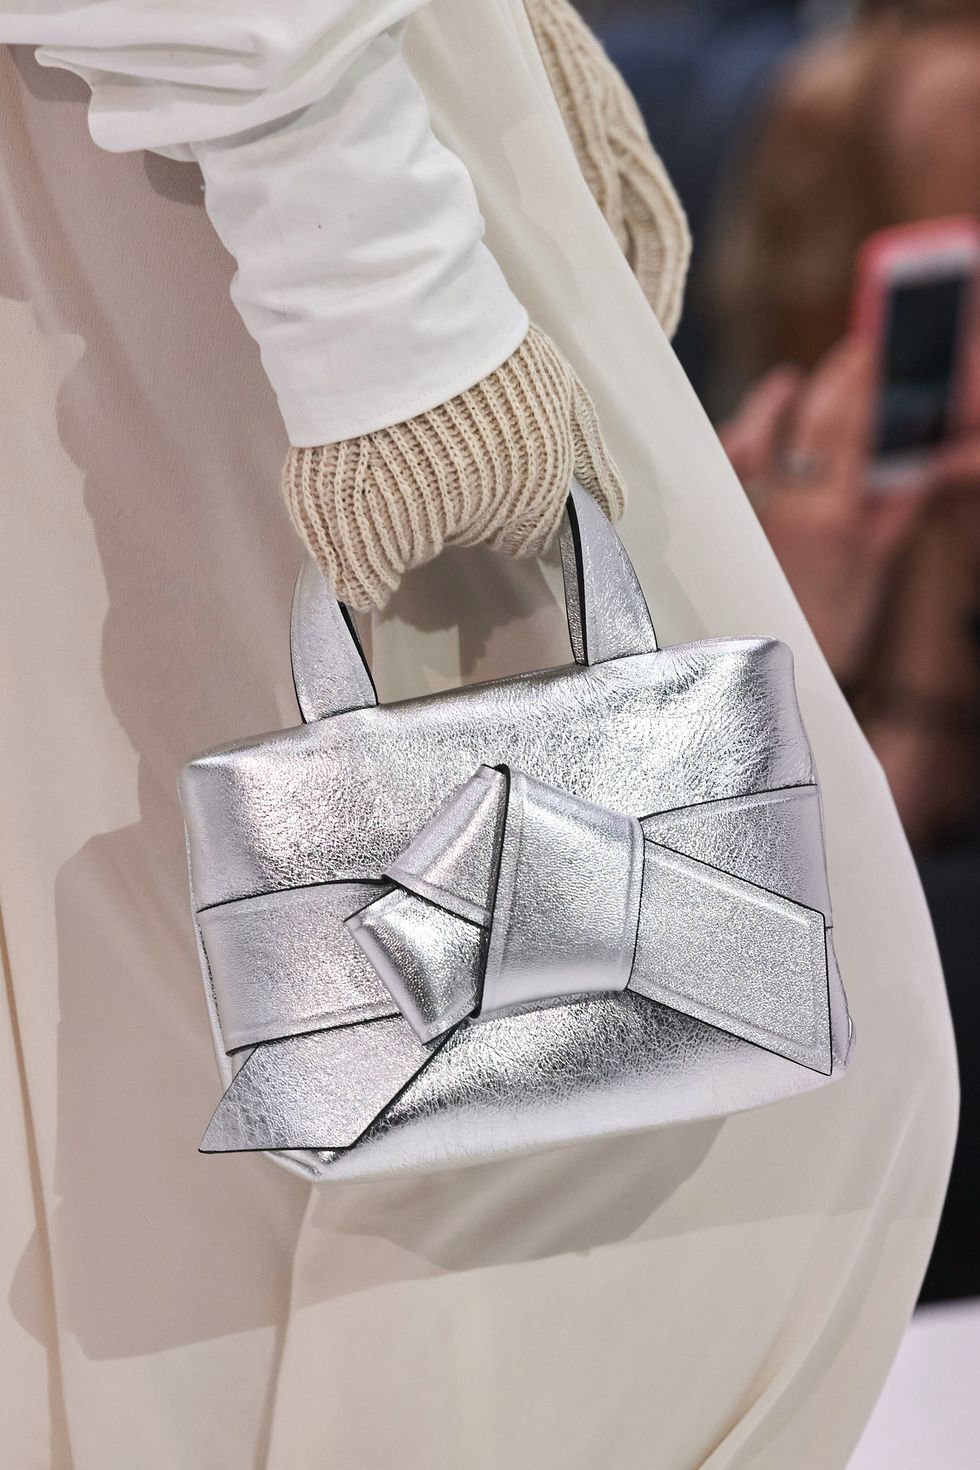 5 Biggest Bag Trends for Fall/Winter 2021 — Purses Runway Fashion Versace  Prada Gucci